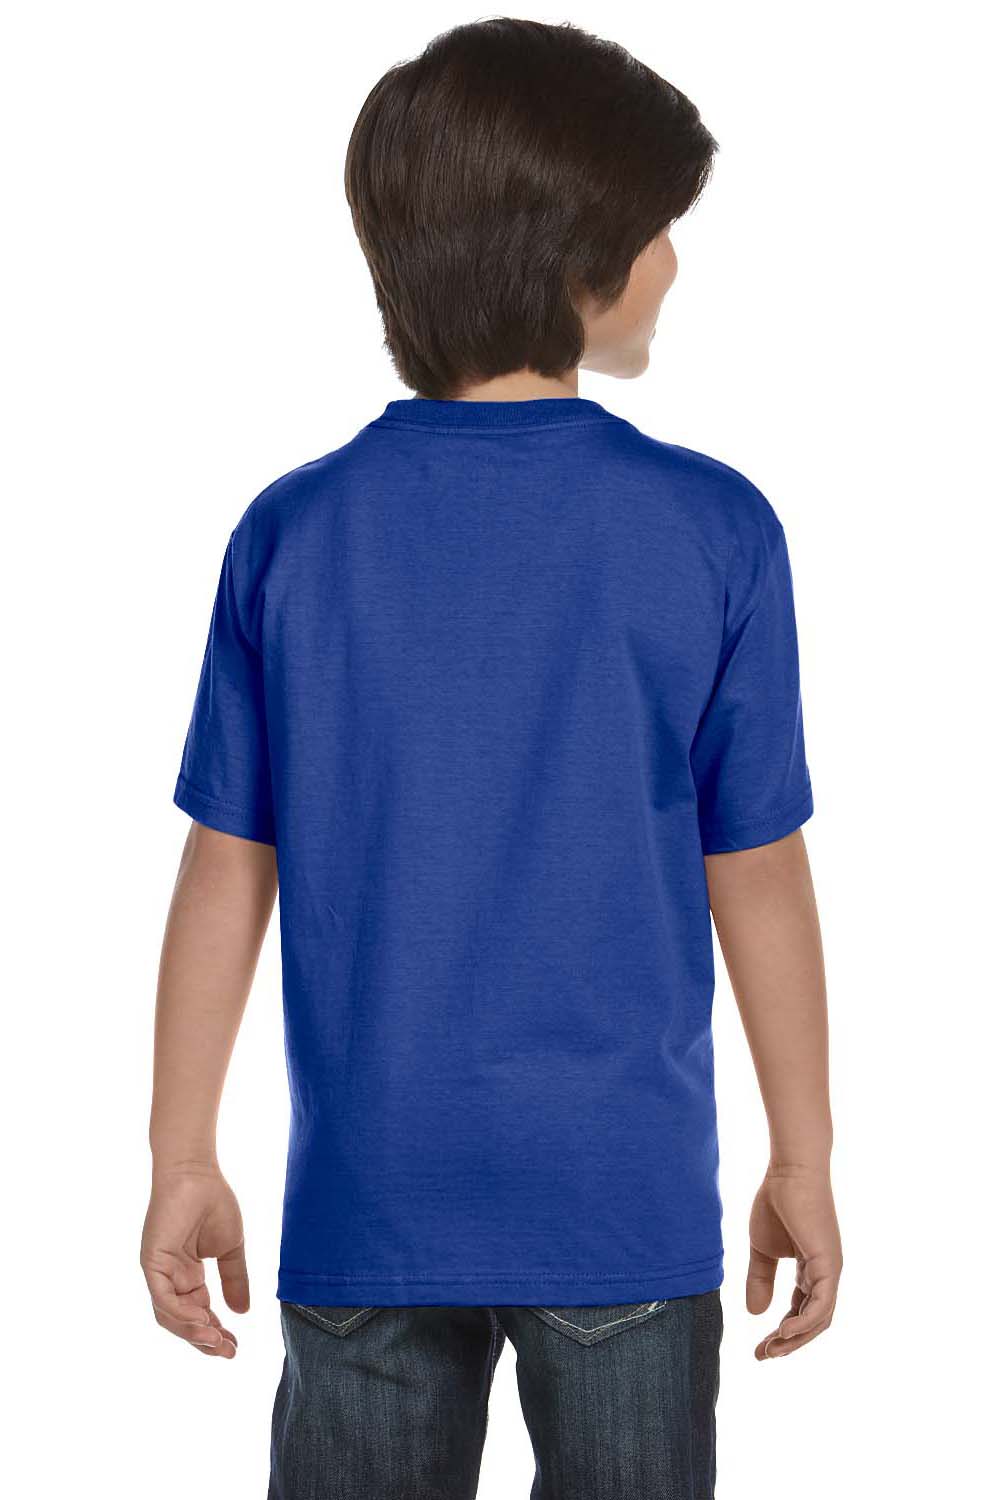 Hanes 5380 Youth Beefy-T Short Sleeve Crewneck T-Shirt Royal Blue Back